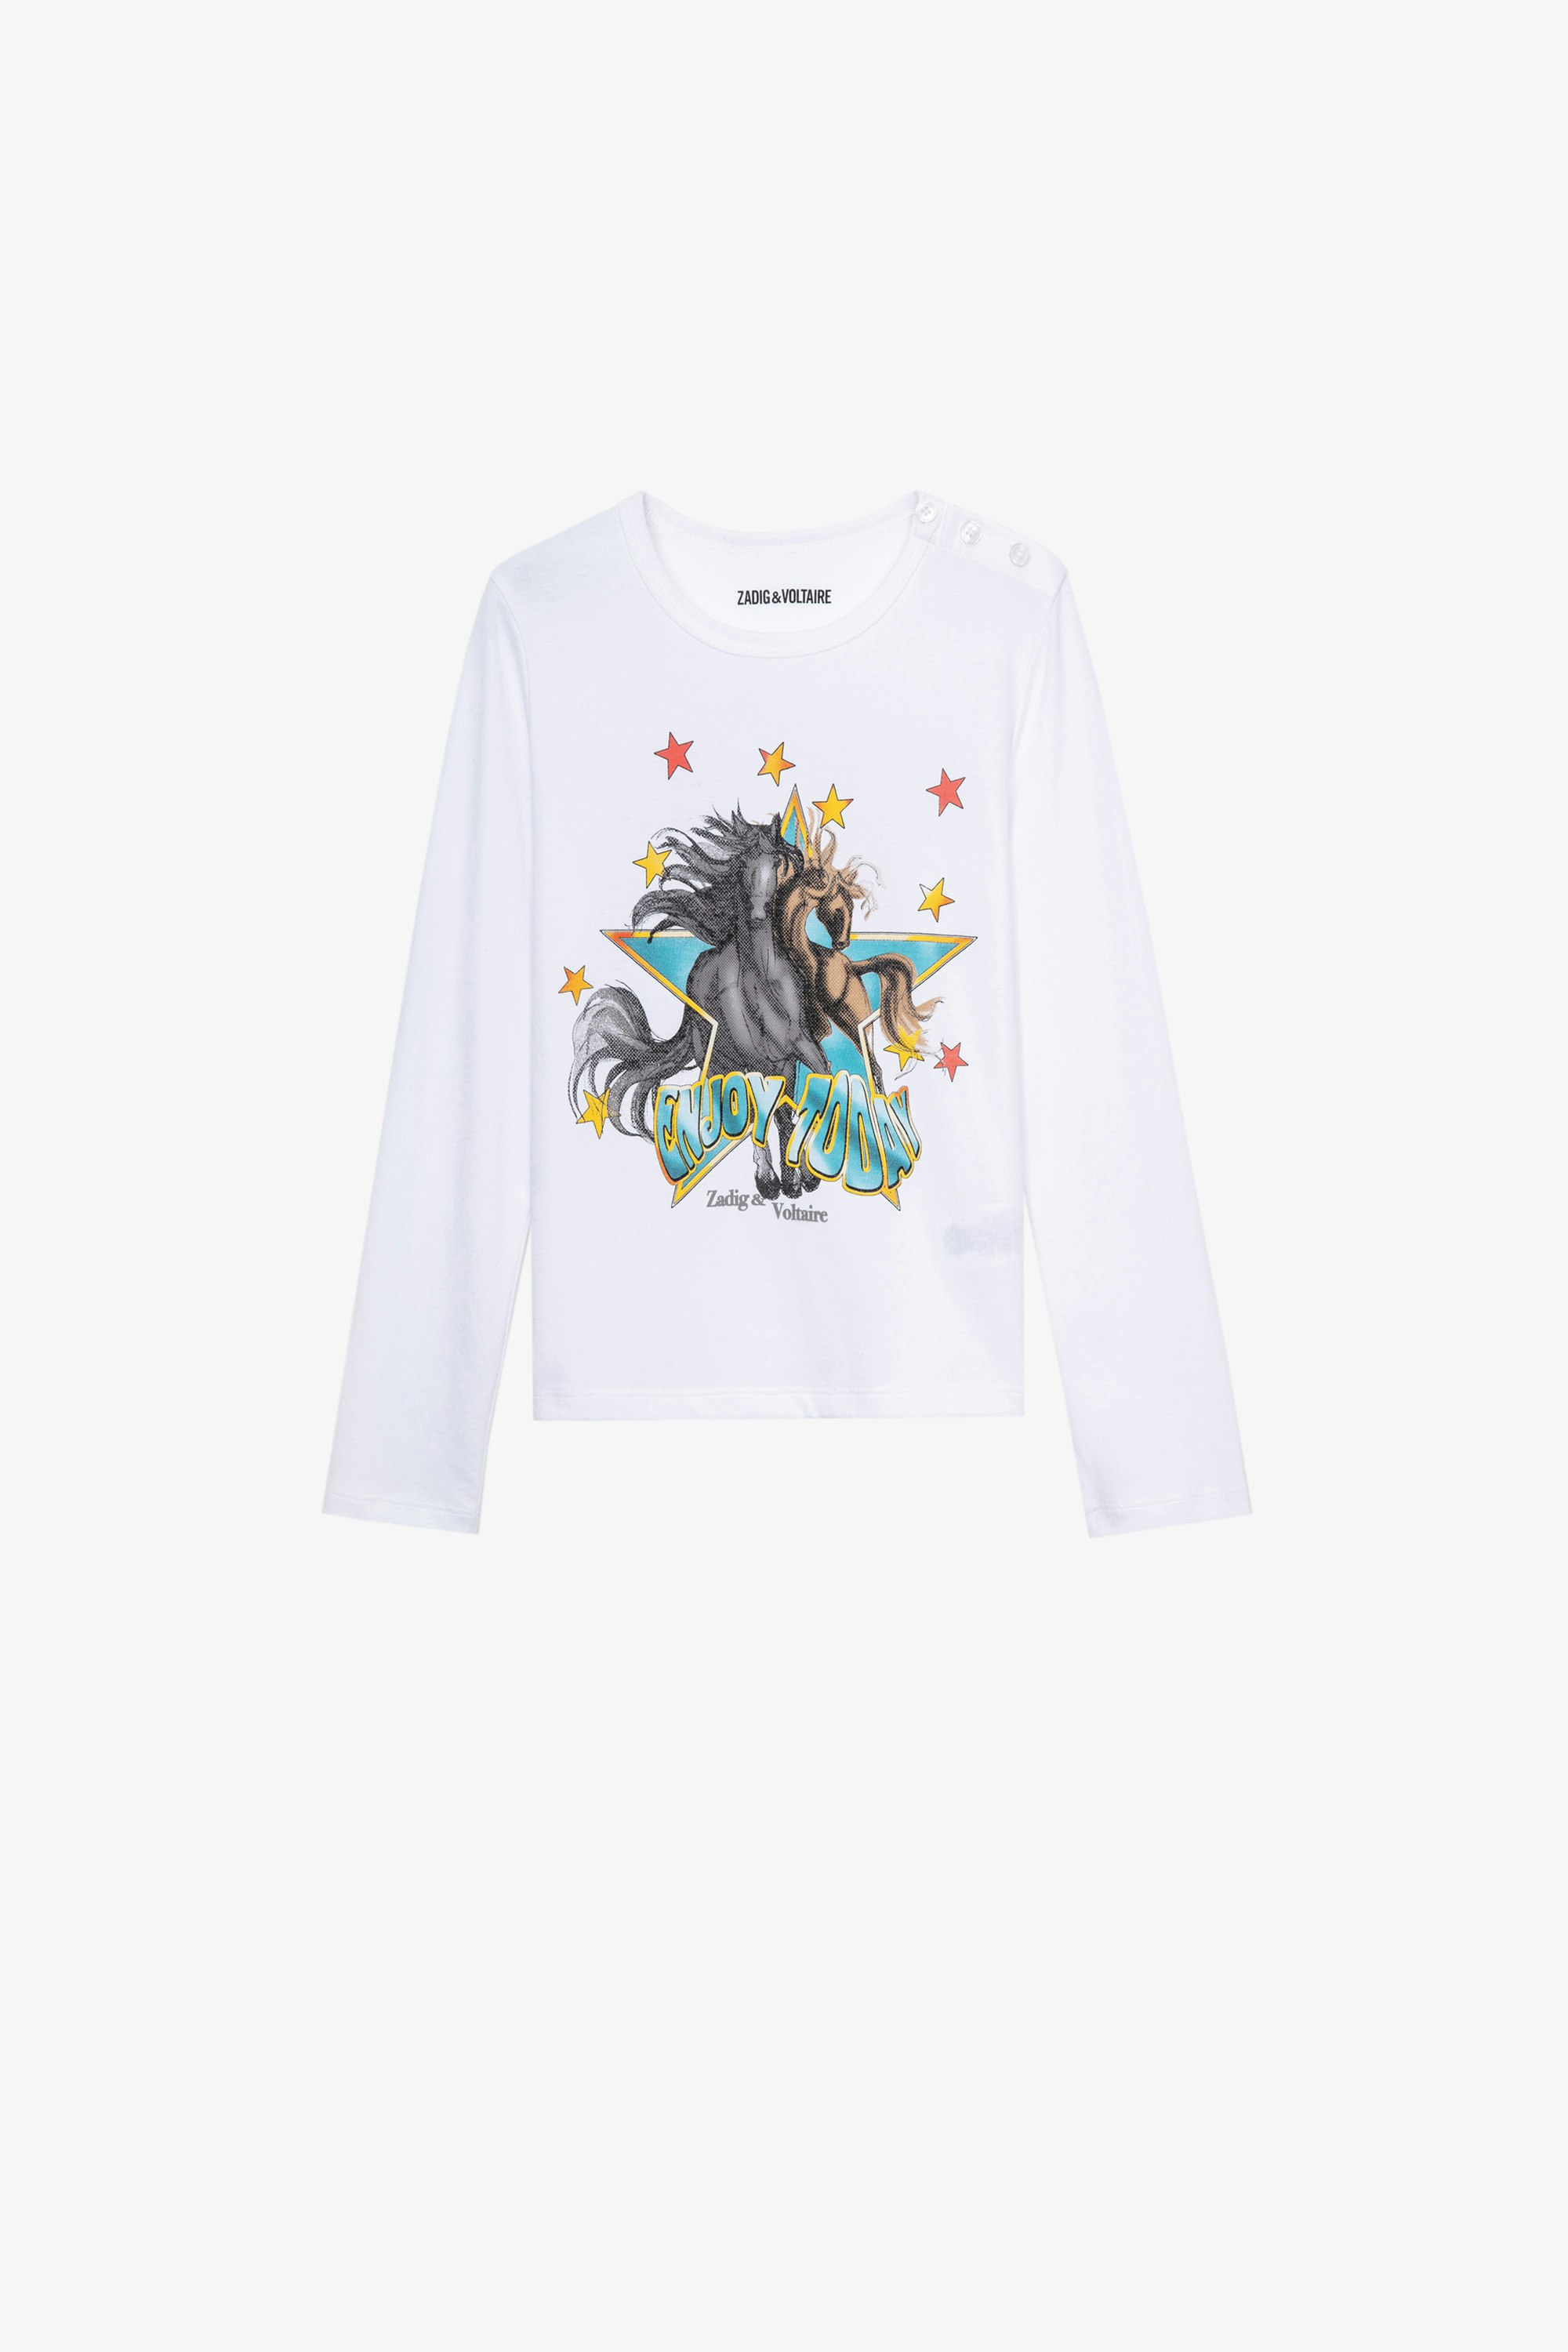 Anie Children’s トップス Children’s white long-sleeve cotton T-shirt featuring prints 